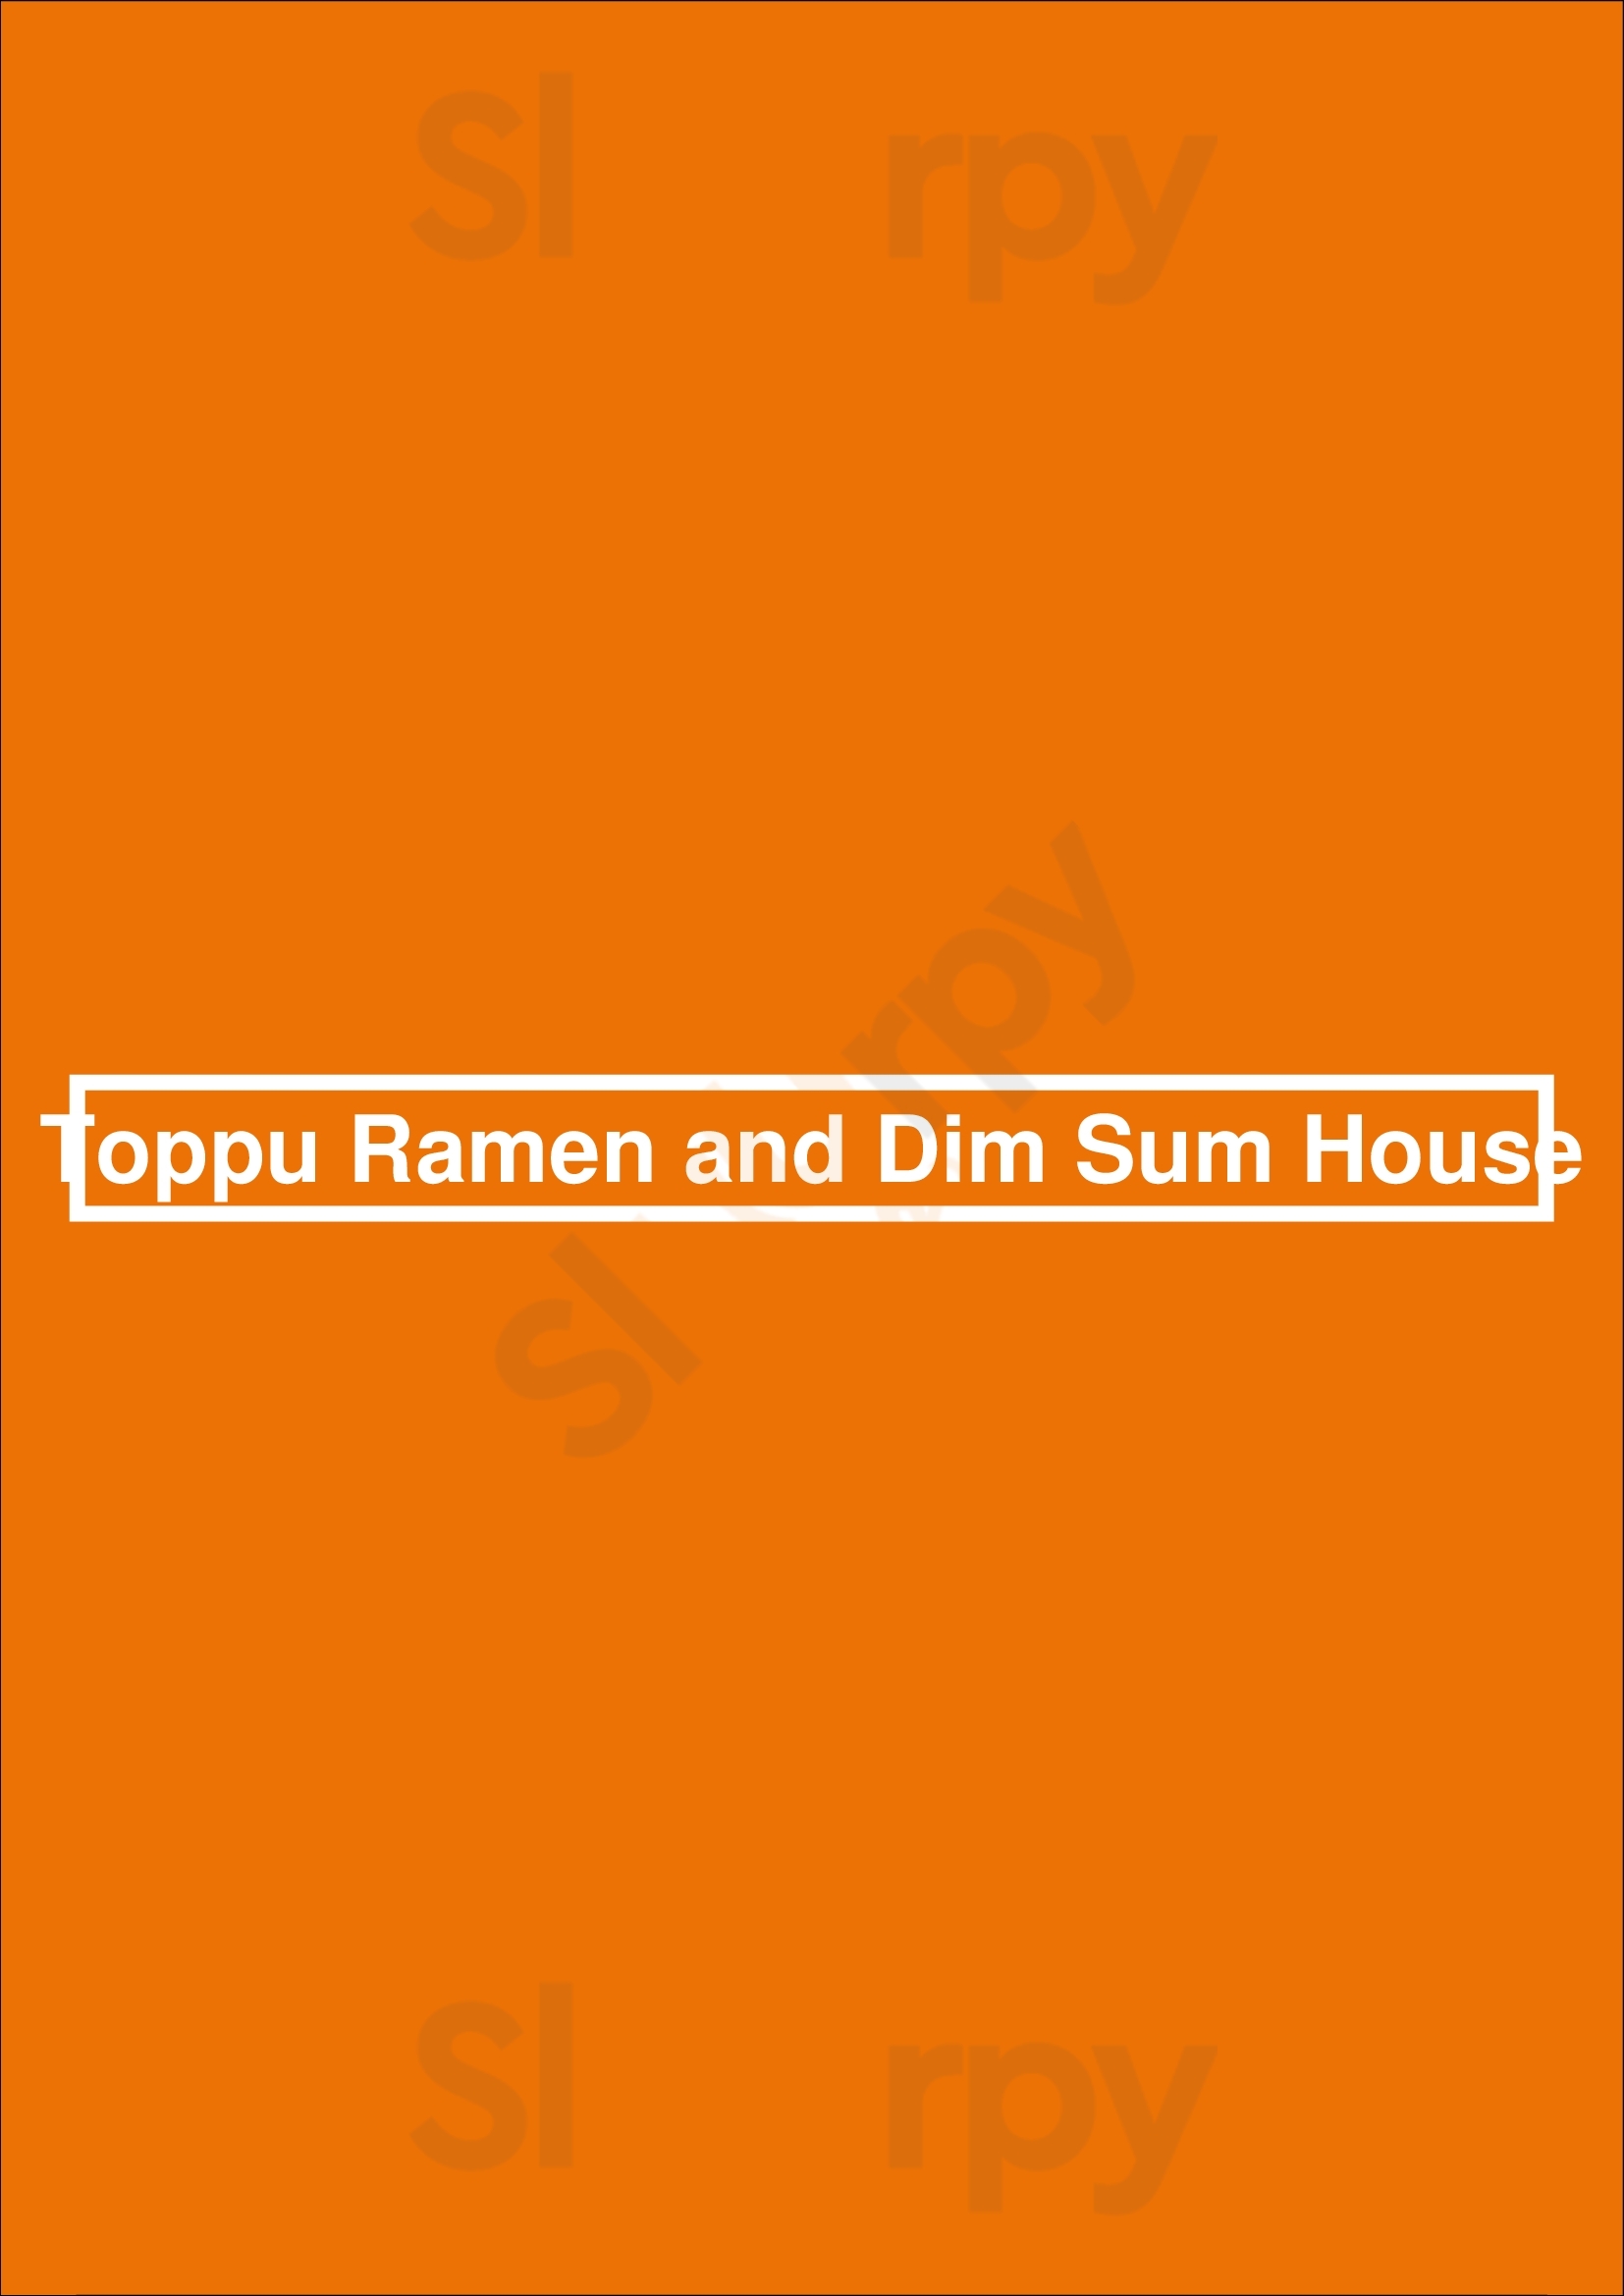 Toppu Ramen And Dim Sum House San Francisco Menu - 1